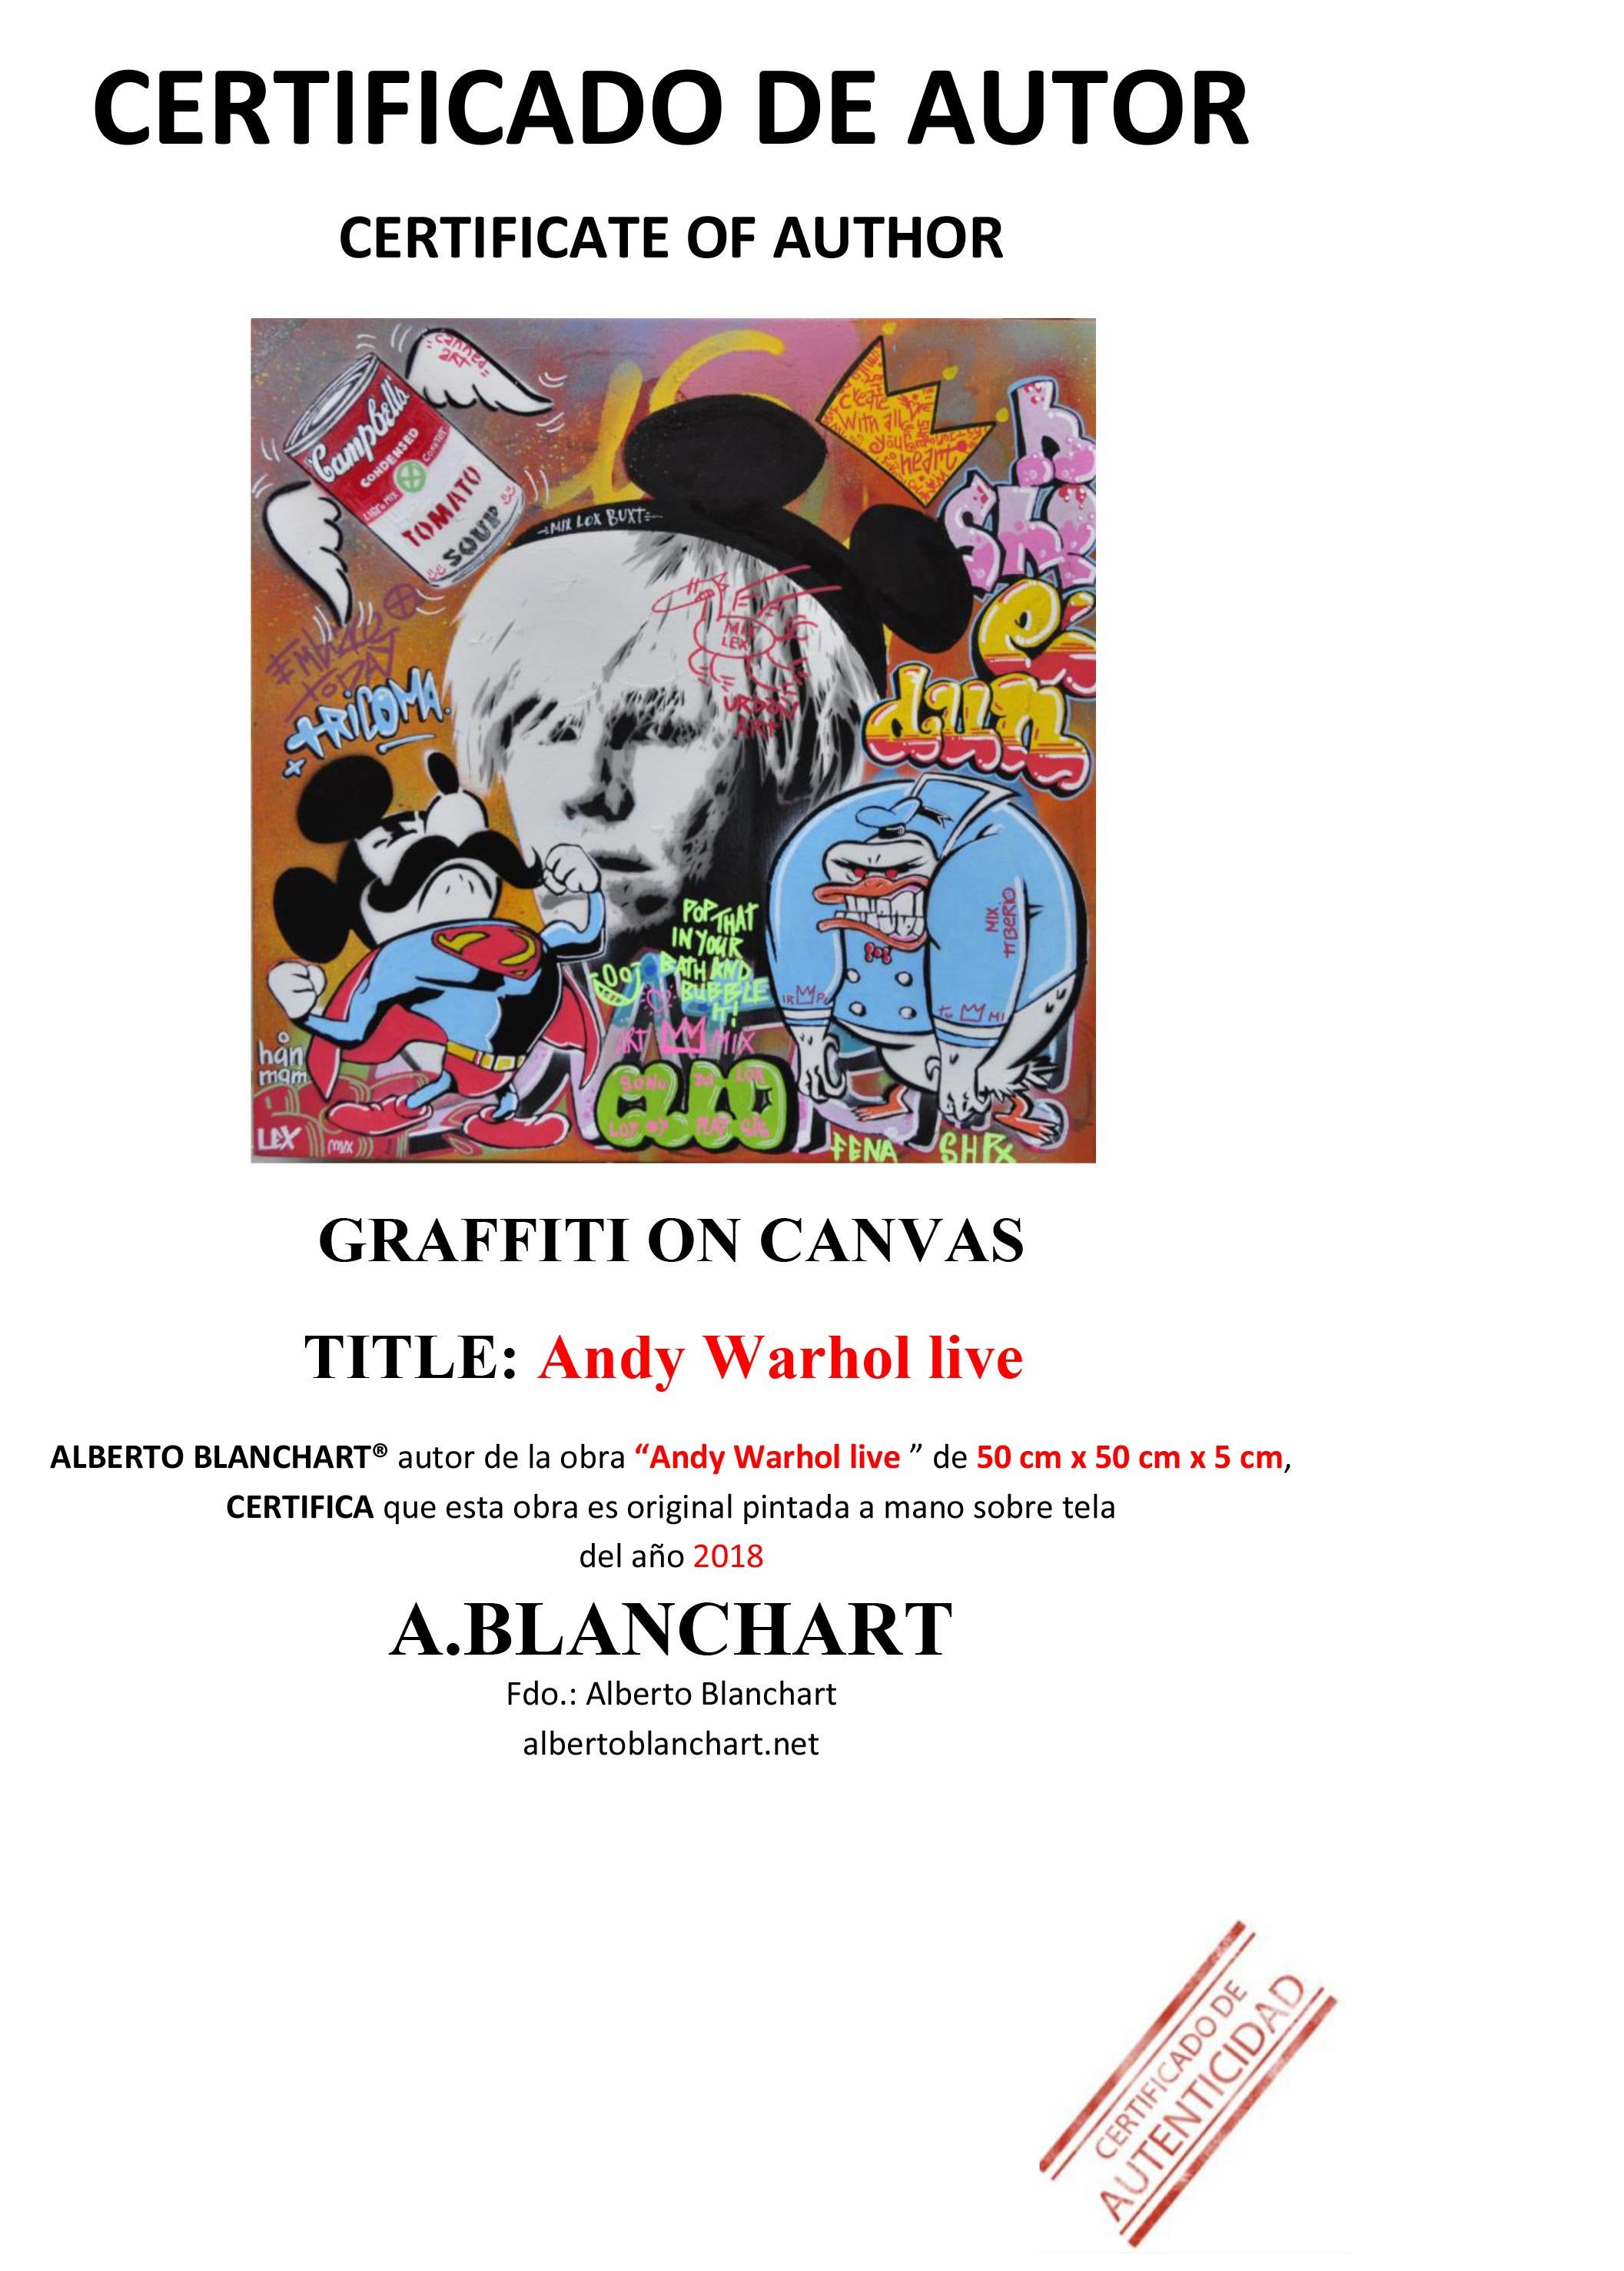 ANDY WARHOL LIVE  - Street Art Mixed Media Art by Alberto Blanchart